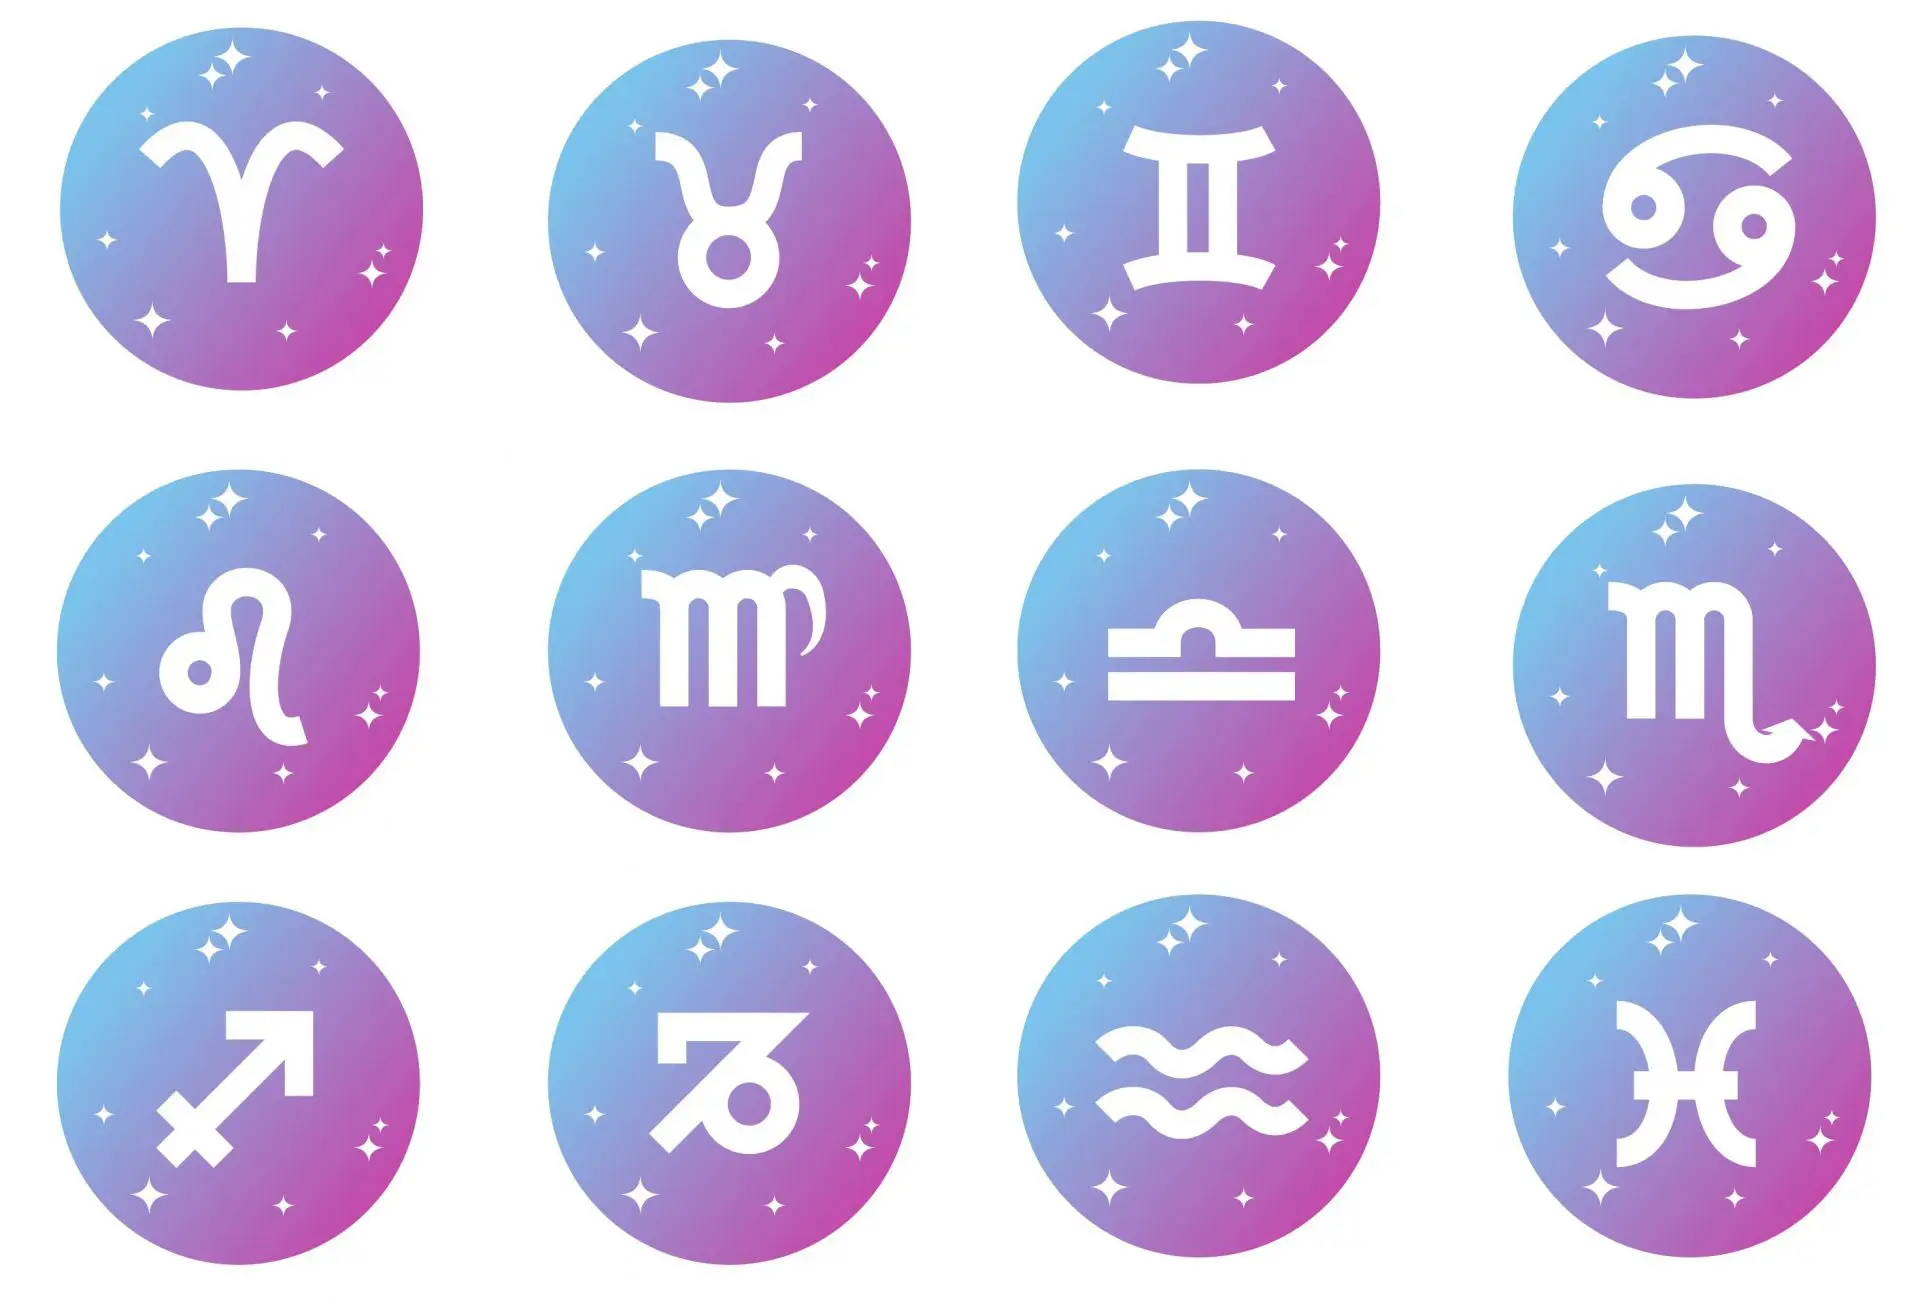 astrology symbols copy and paste not emoji